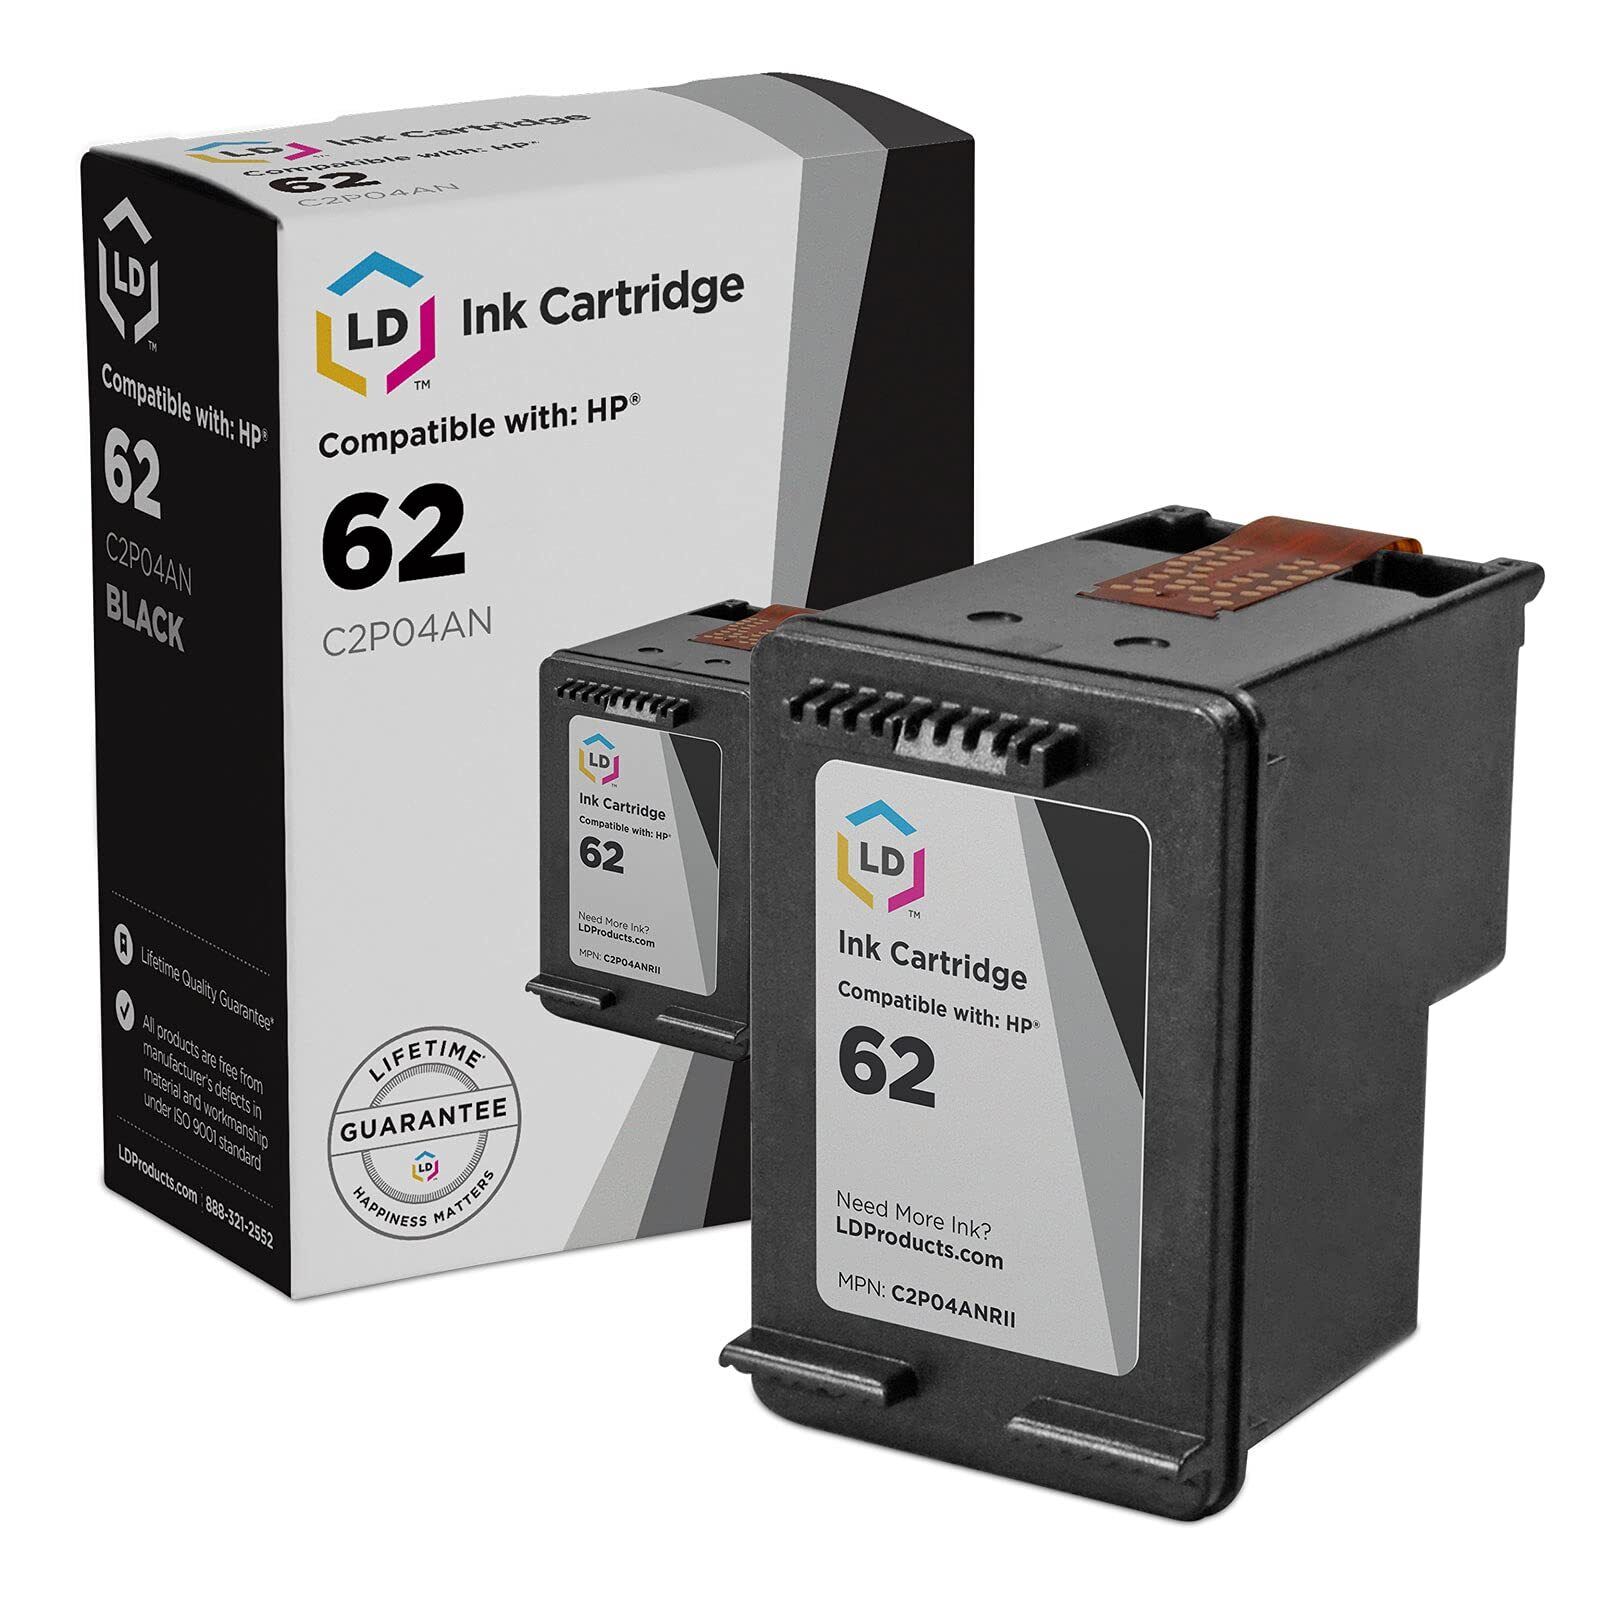 LD C2P04AN 62 Black Ink Cartridge for HP Printer